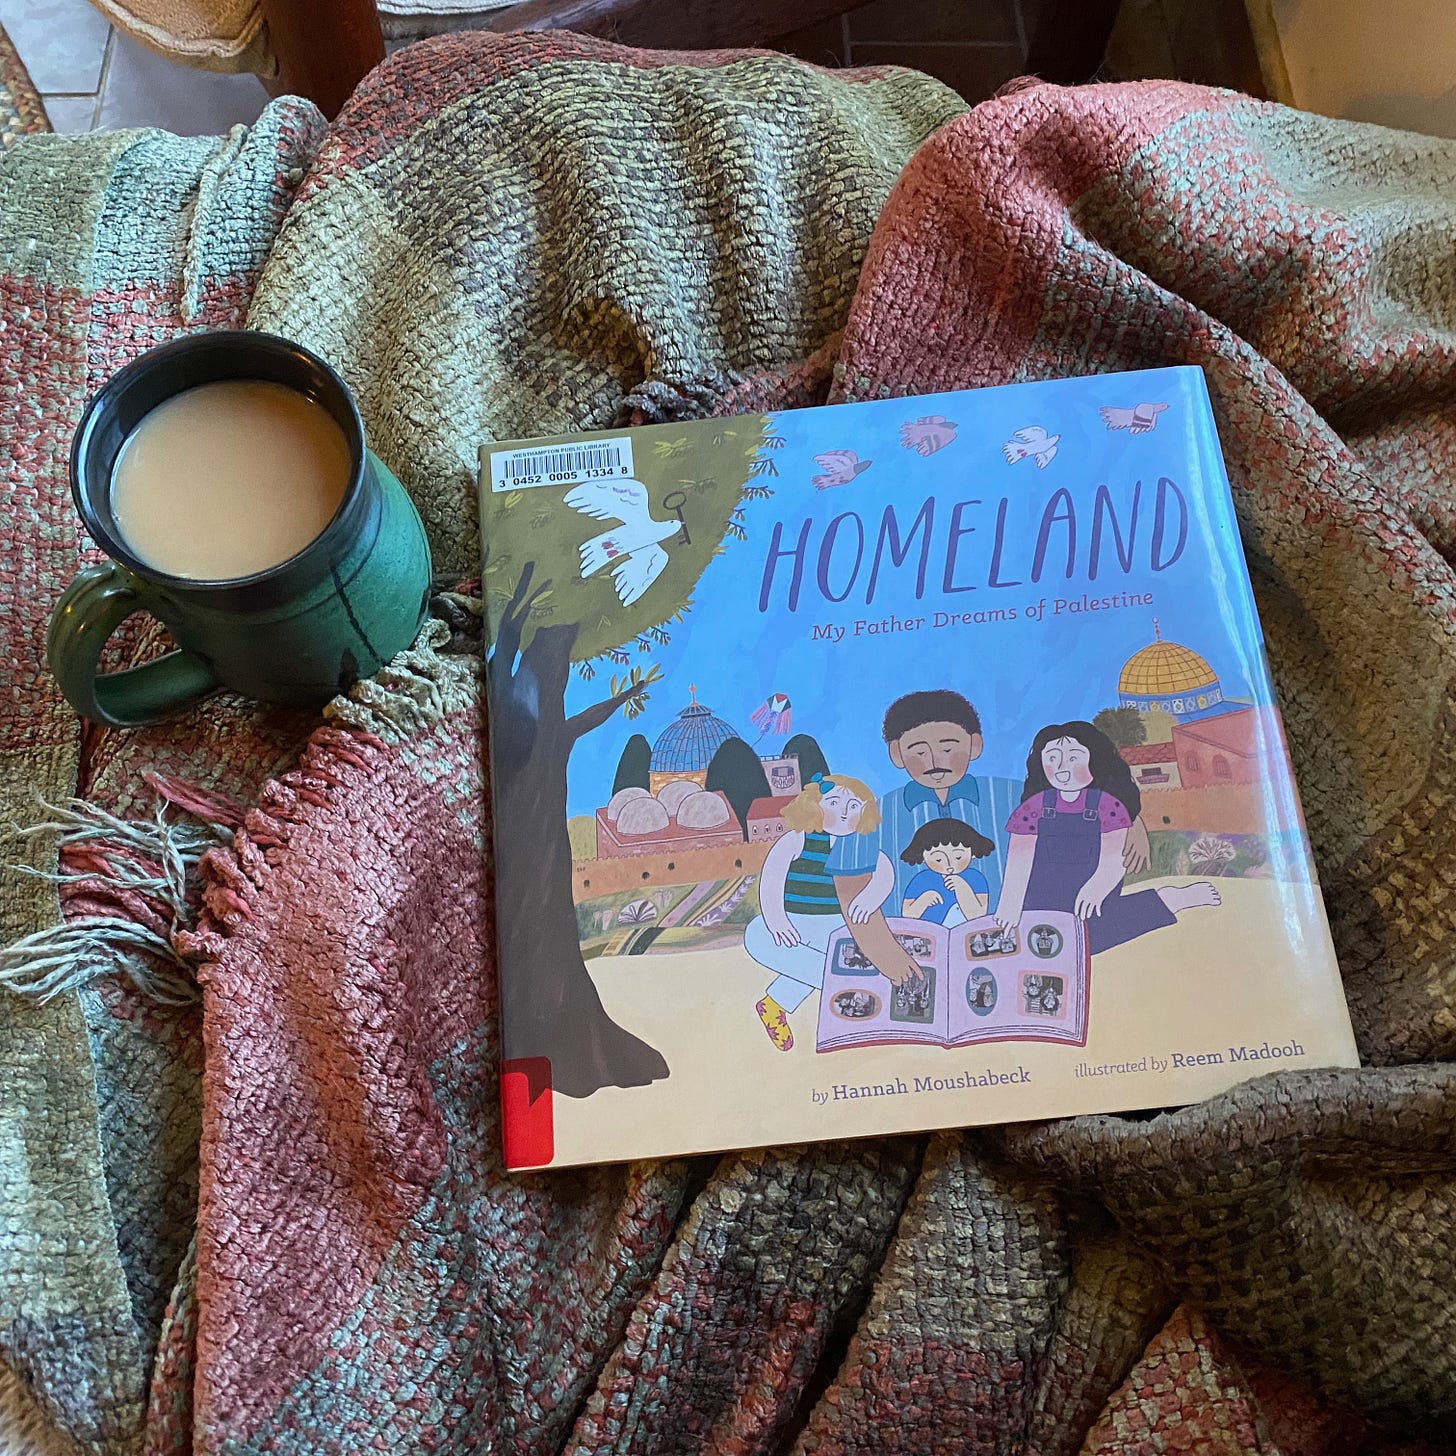 Homeland on a blanket next to a green ceramic mug of tea.